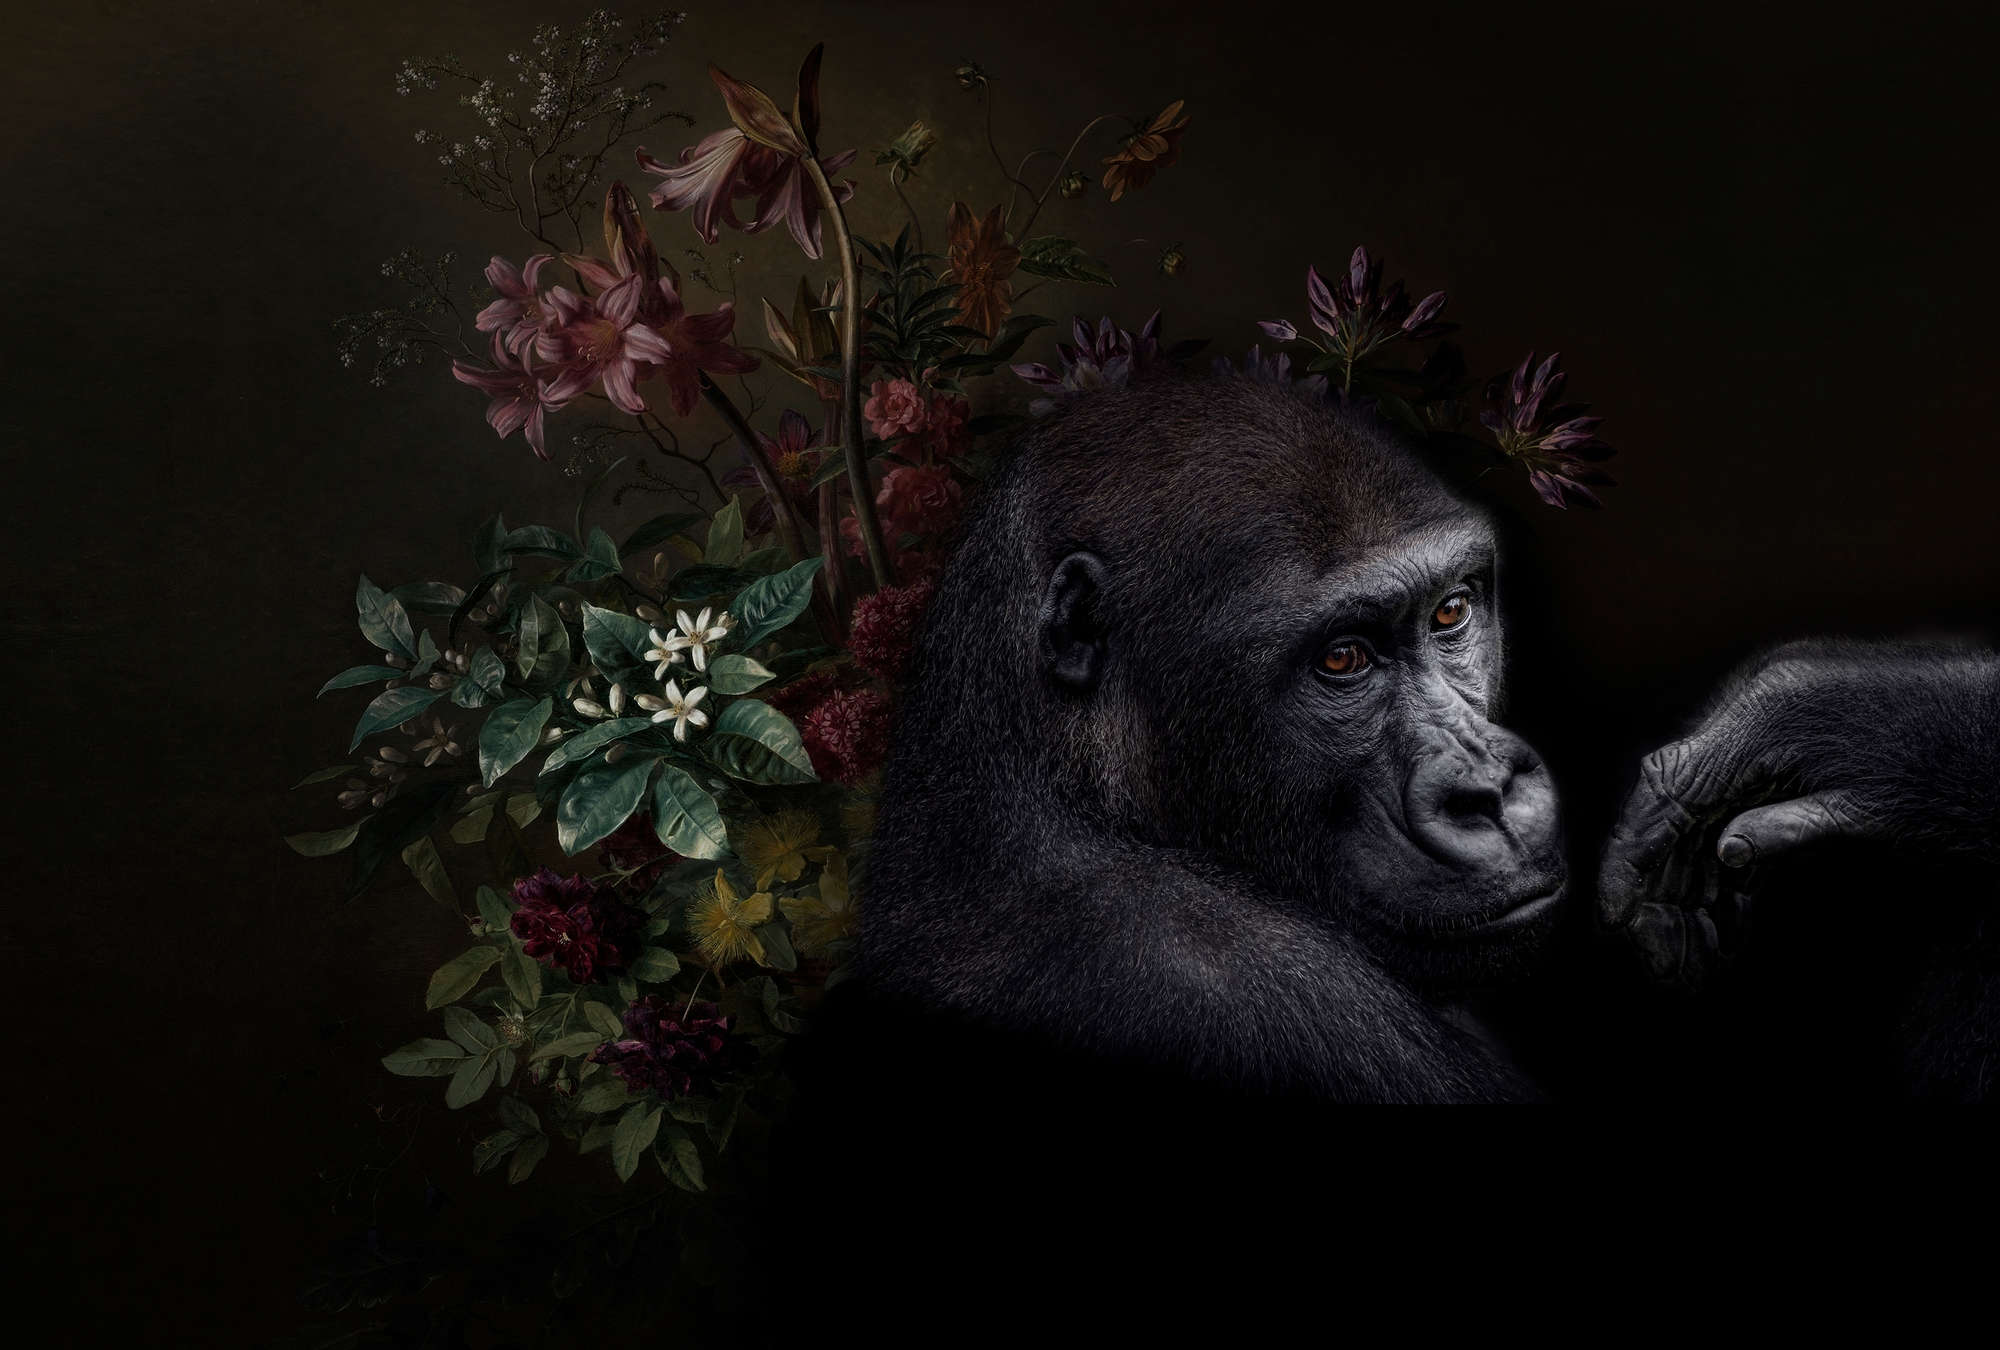             Photo wallpaper Gorilla Portrait with flowers - Walls by Patel
        